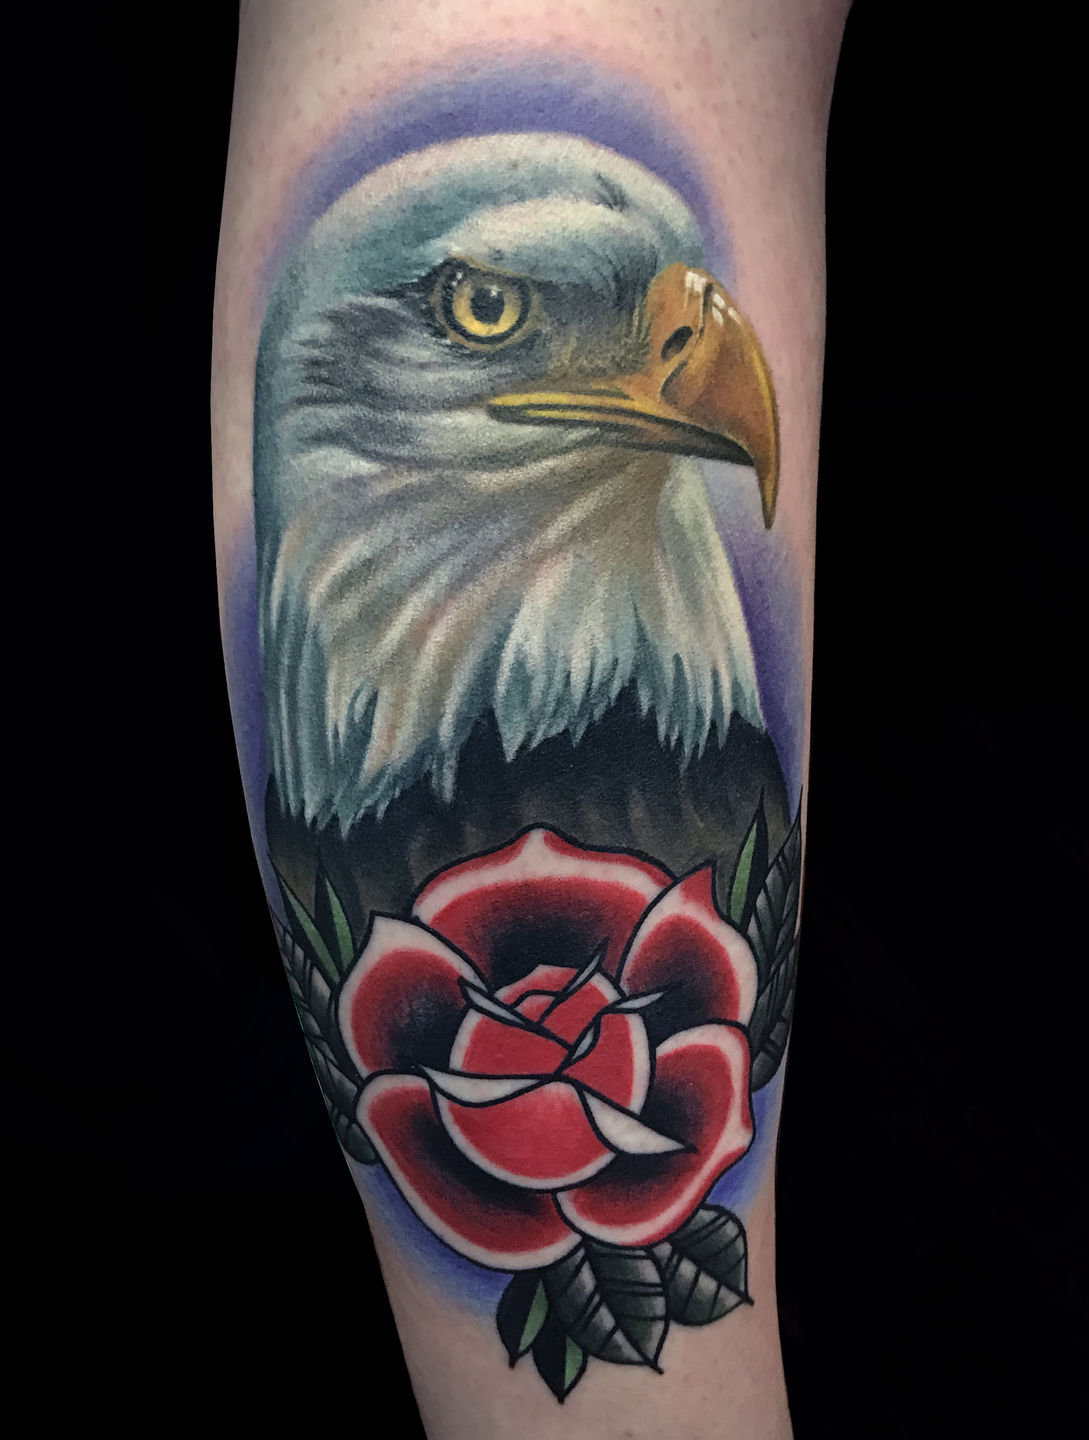 Aggregate 89 about eagle rose tattoo unmissable  indaotaonec